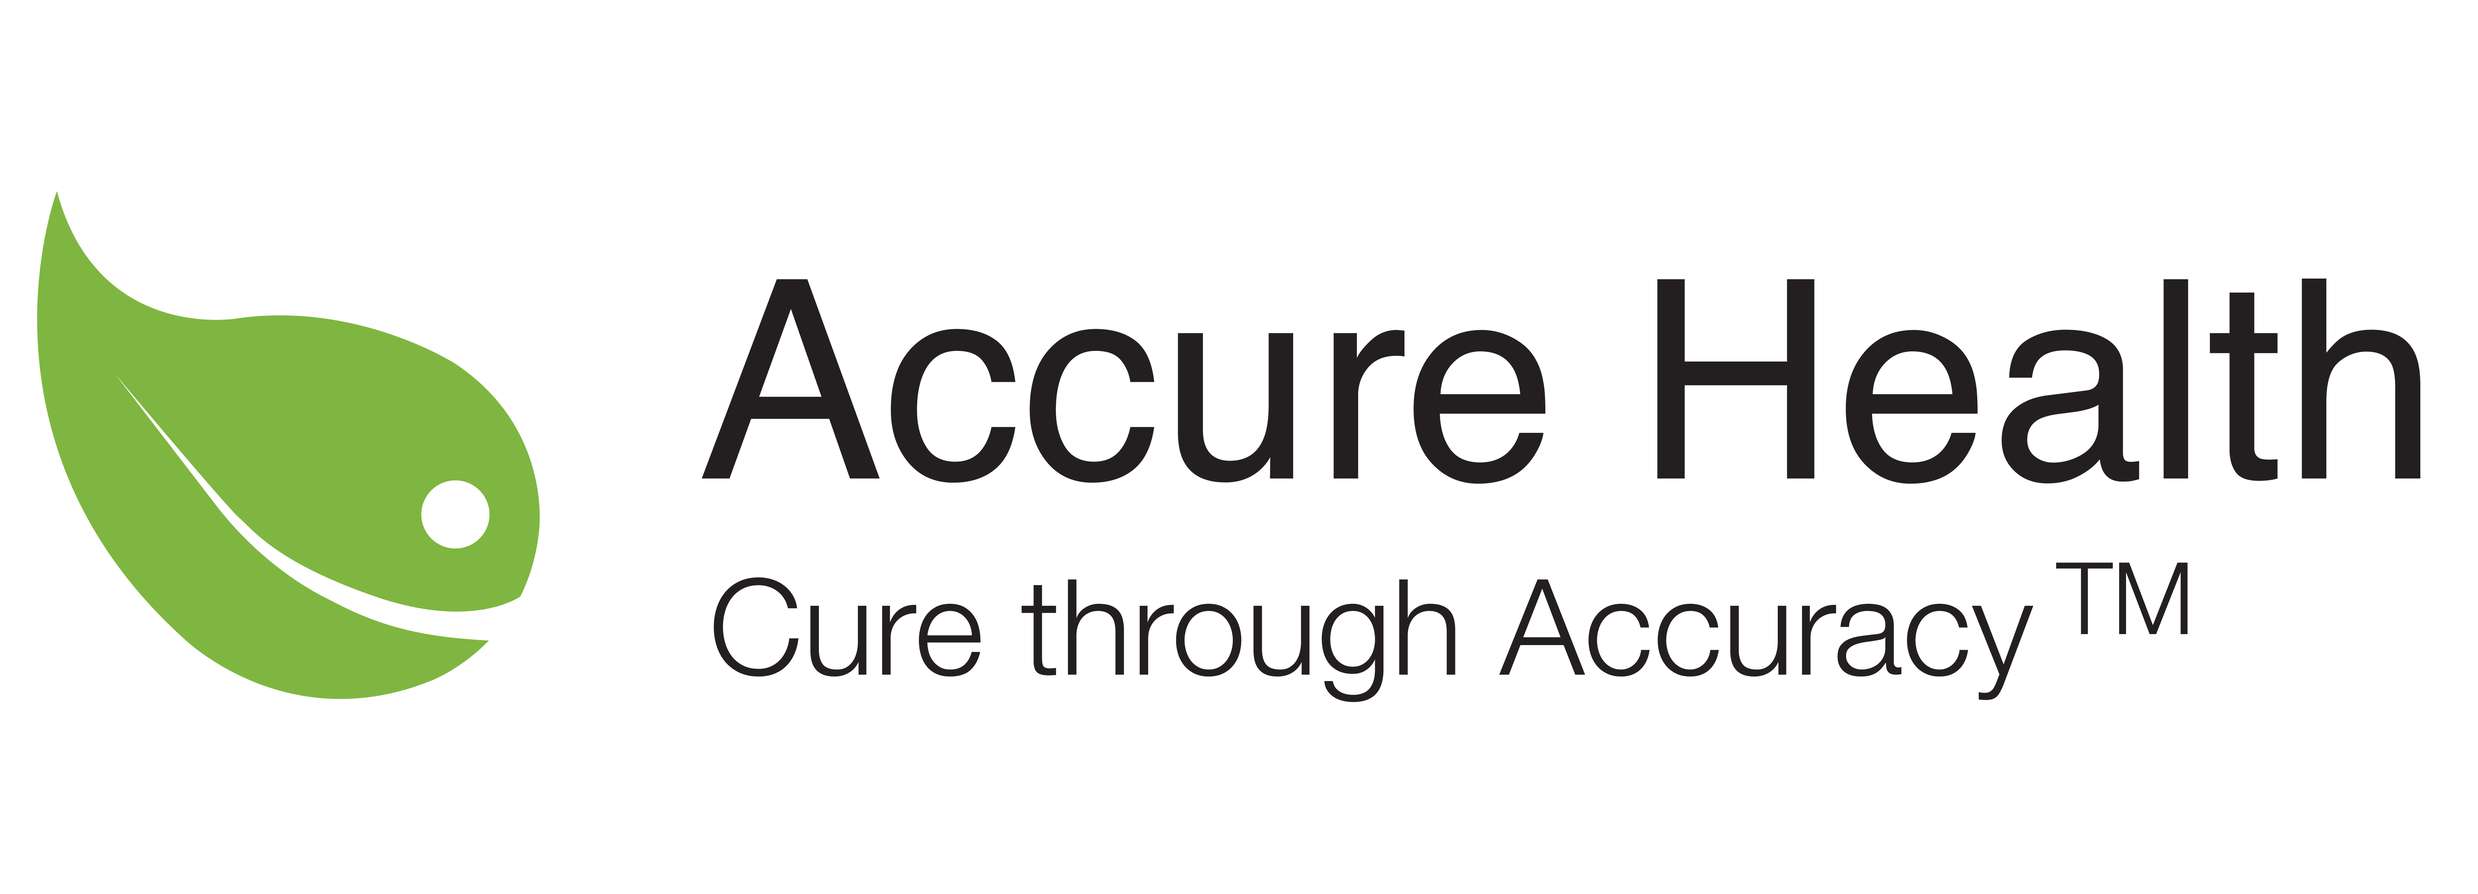 Accure Health, Inc.